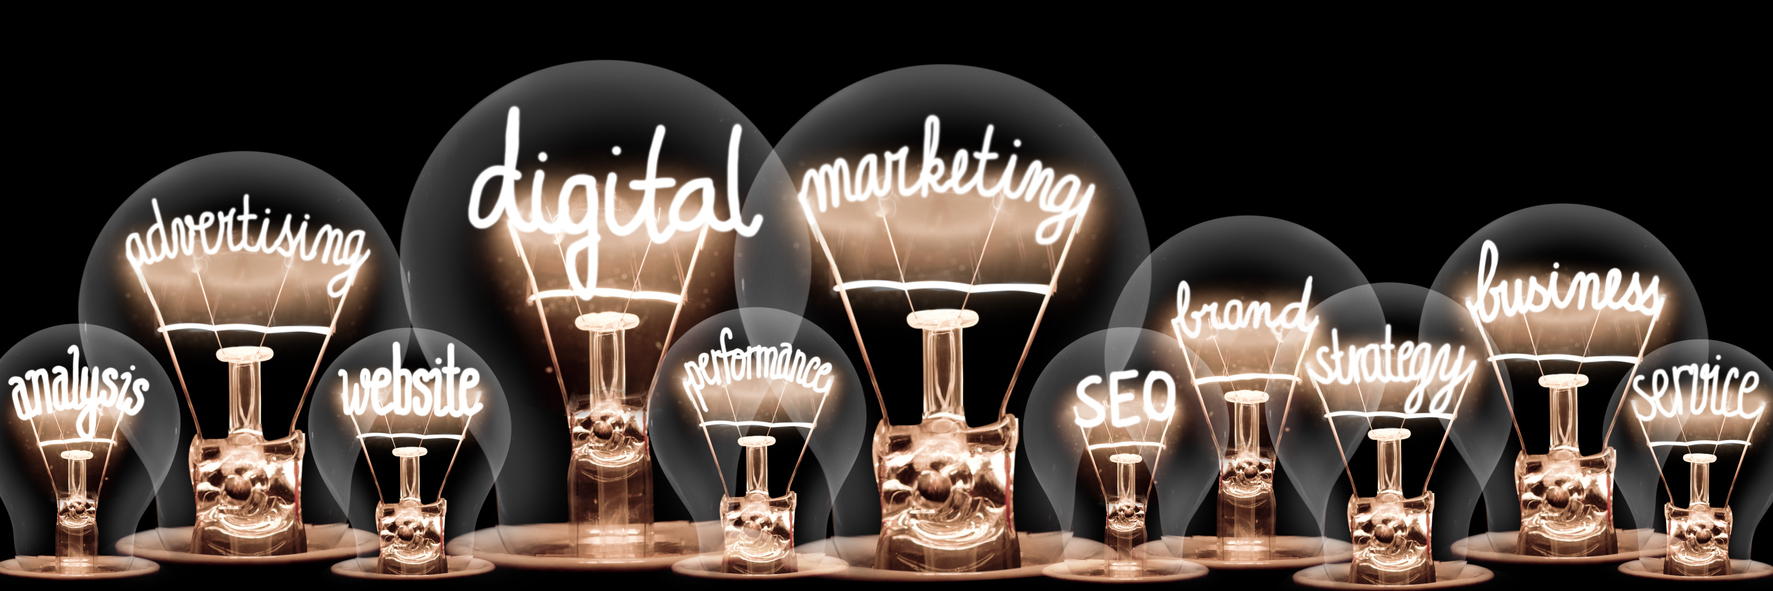 Digital Marketing Concepts - Buhv Designs